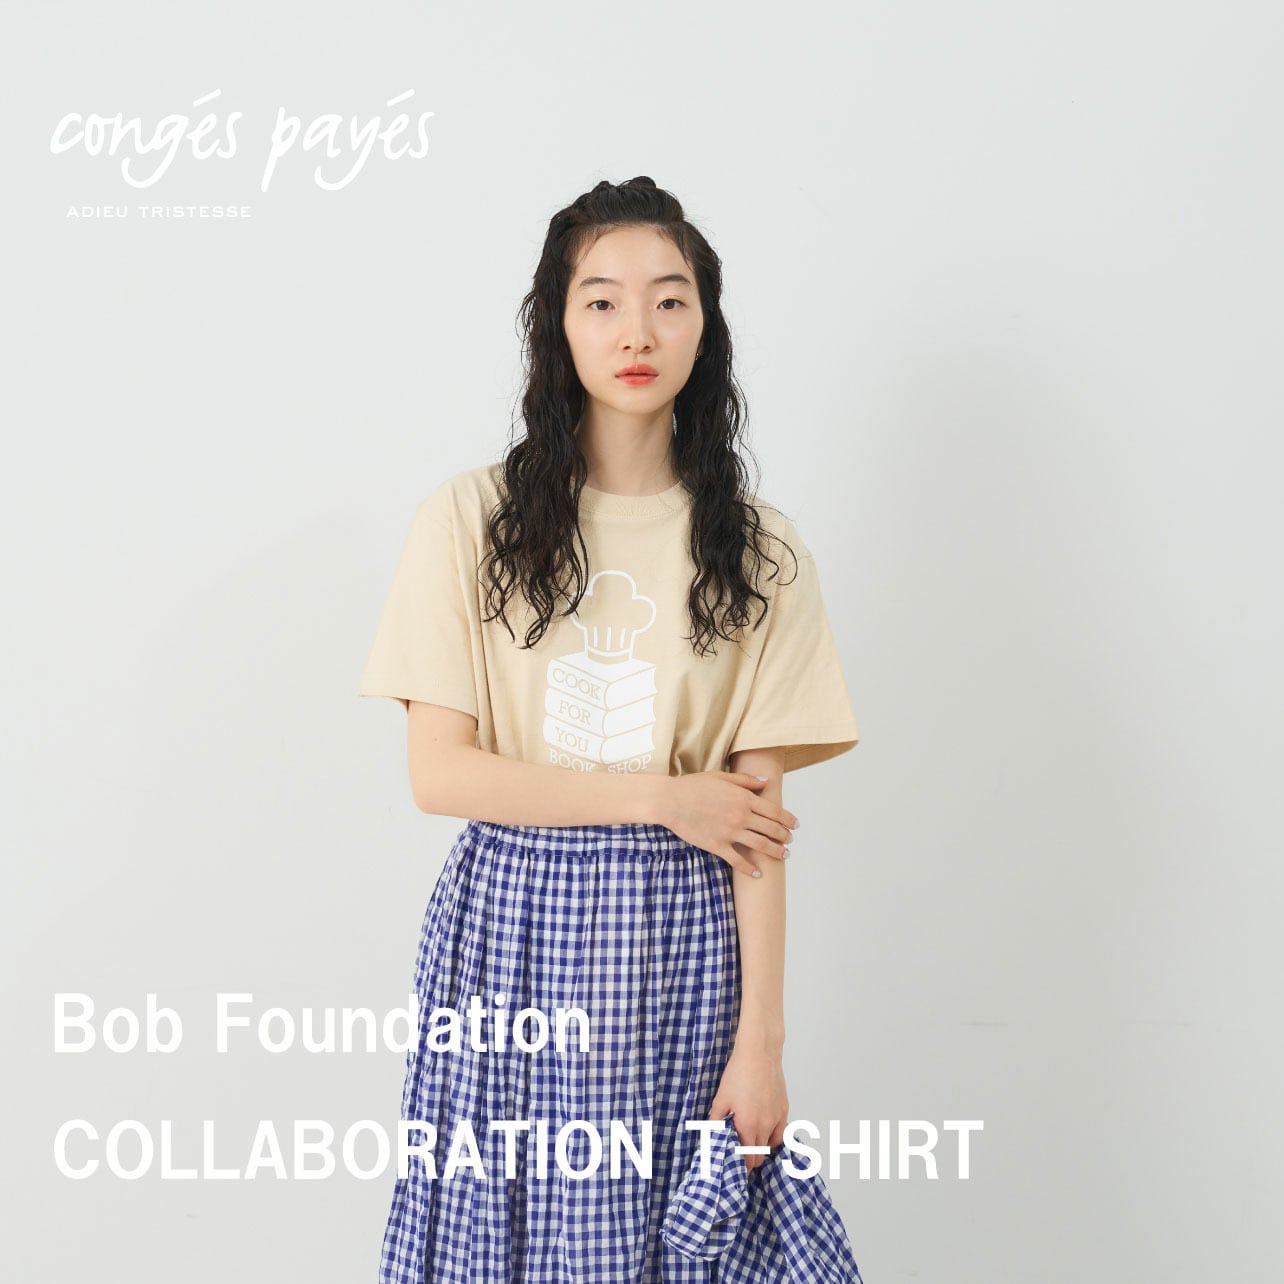 Bob Foundation COLLABORATION T-SHIRT